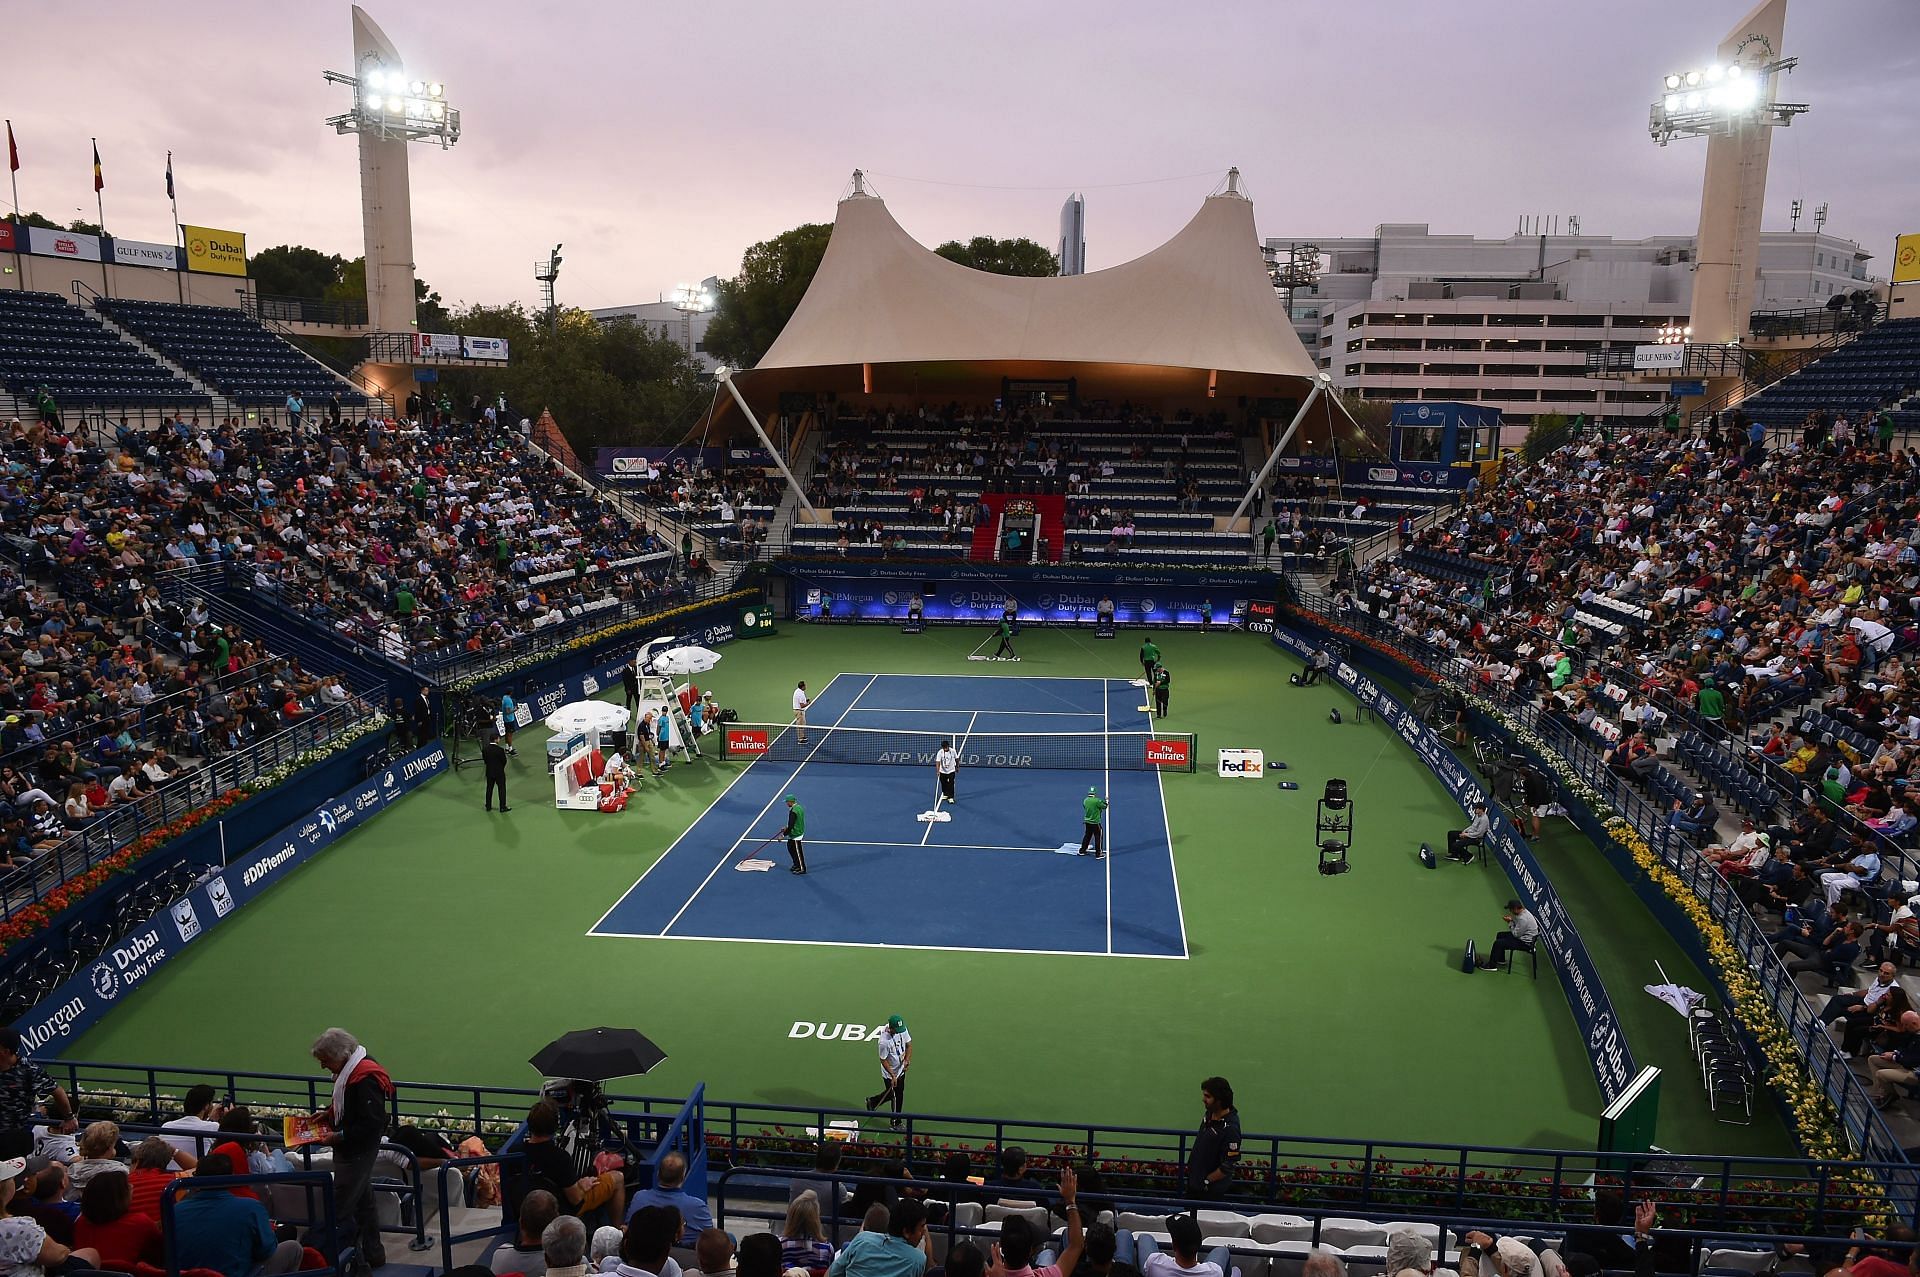 The Dubai Tennis Stadium - Center Court at the Aviation Club Tennis Center